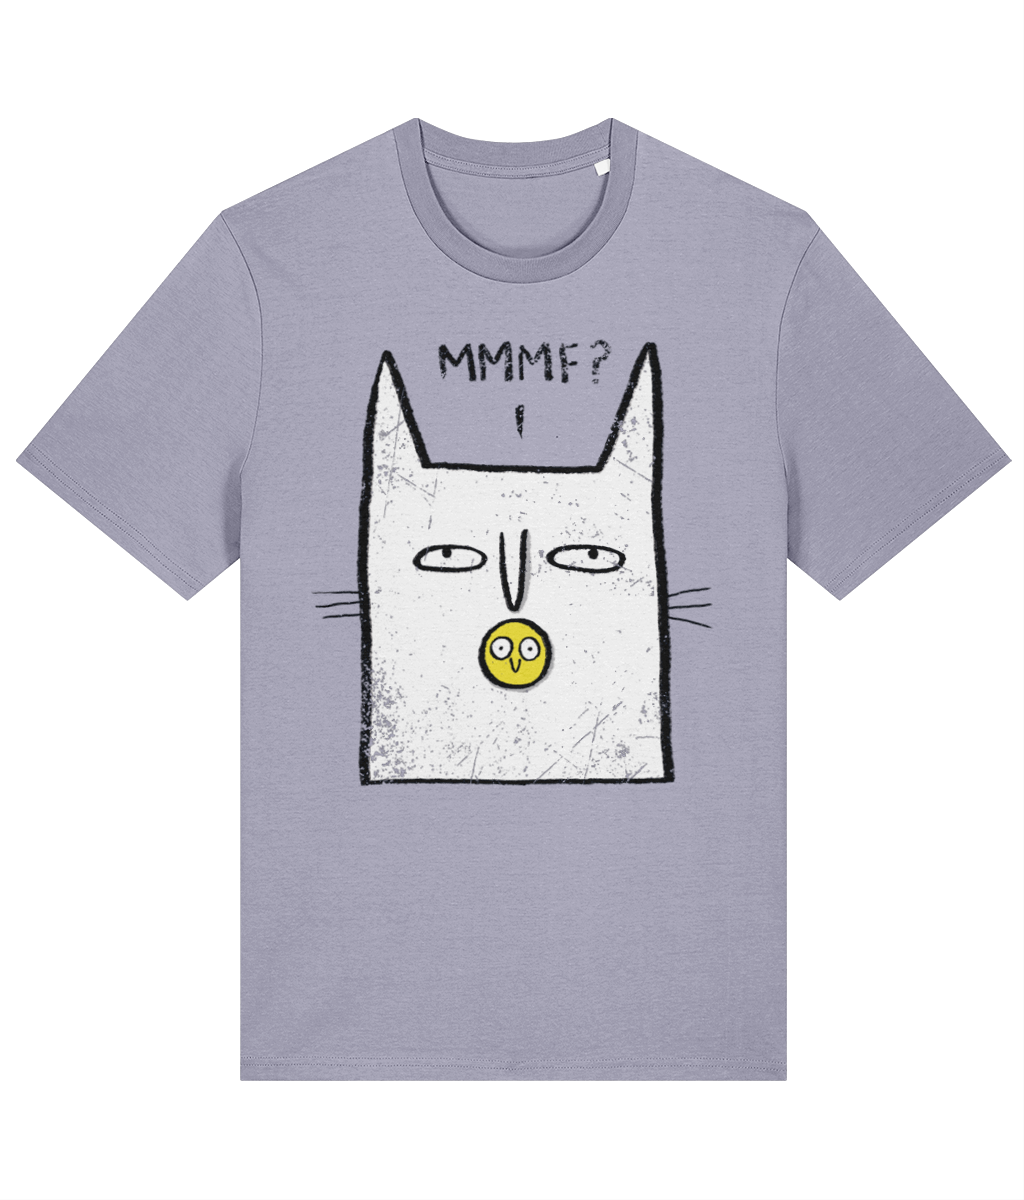 'MMMF?' - TussFace T-shirt